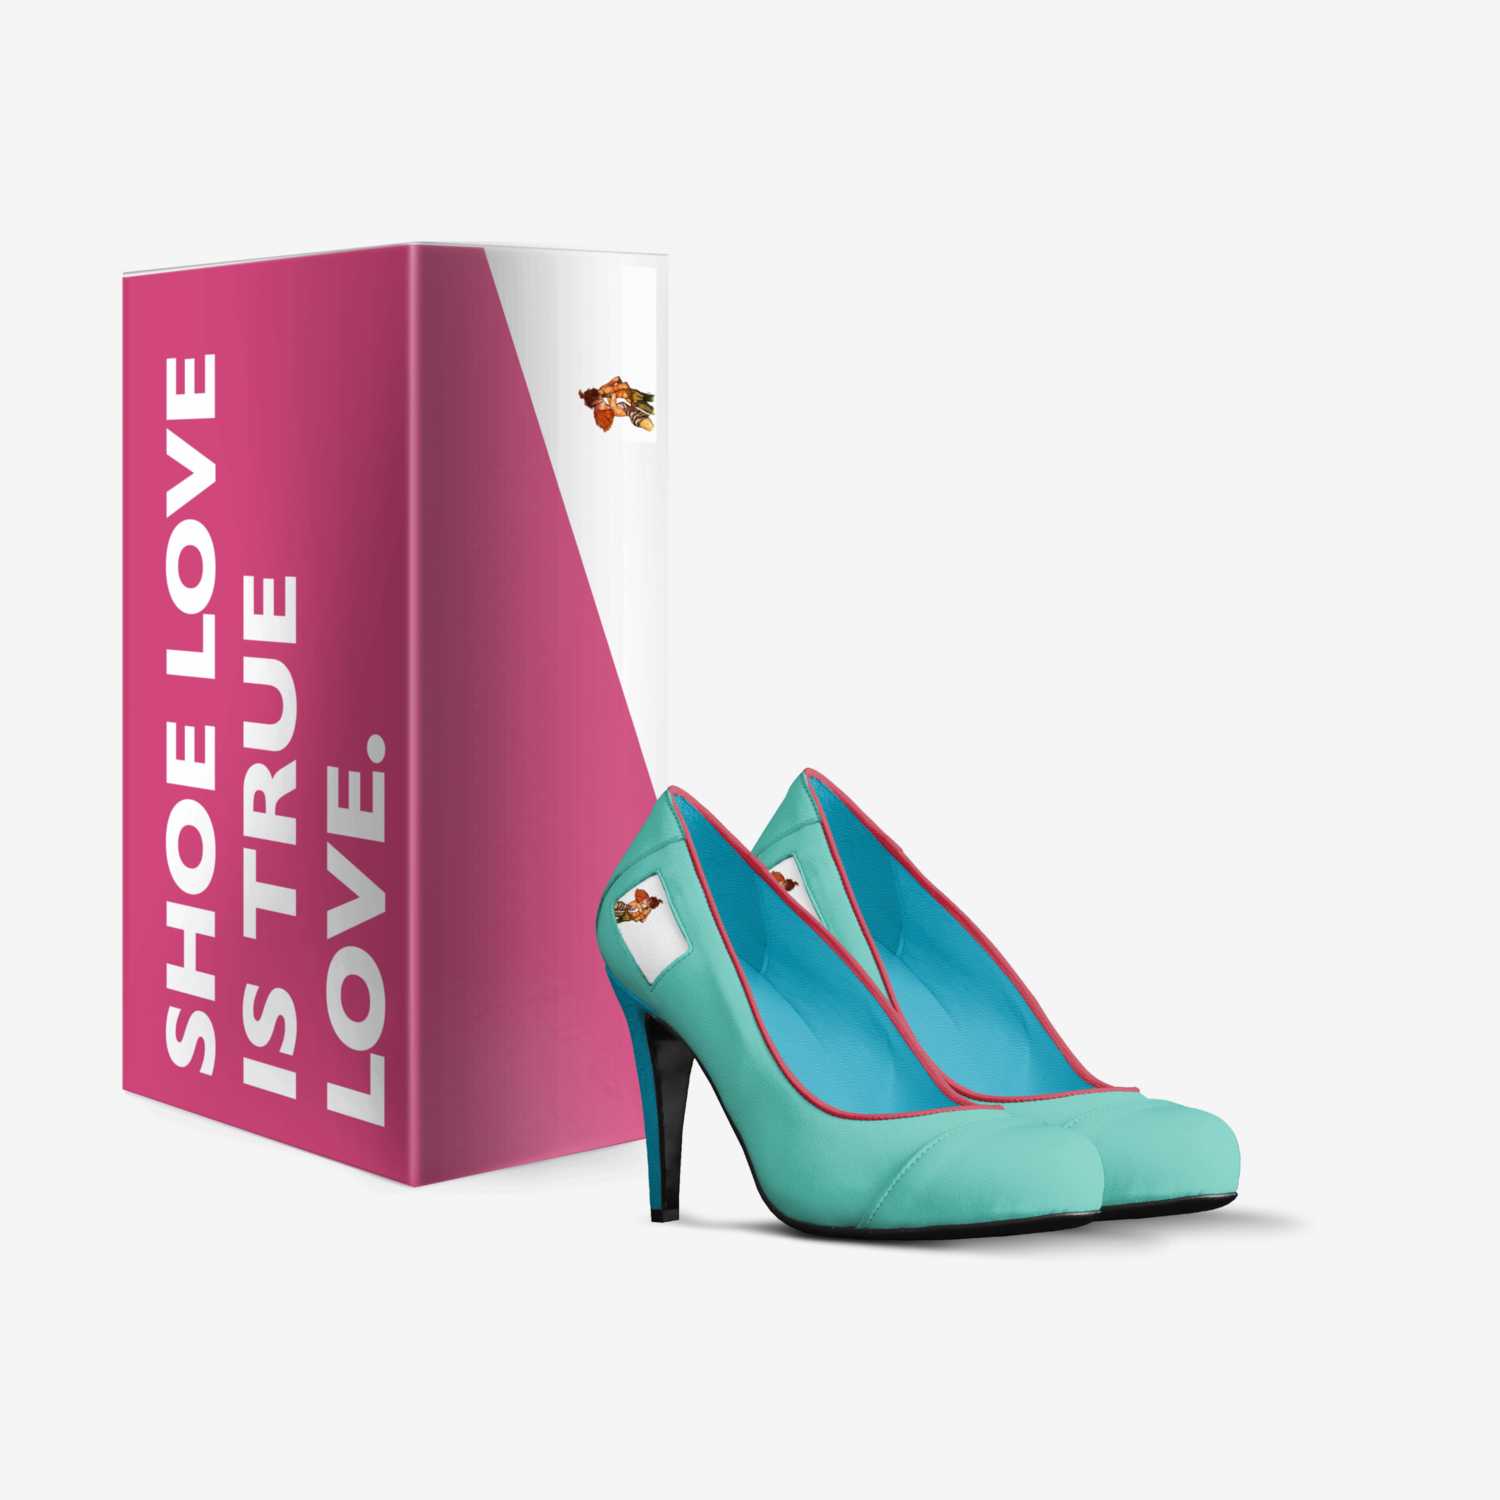 lovely custom made in Italy shoes by Katrina Harry | Box view